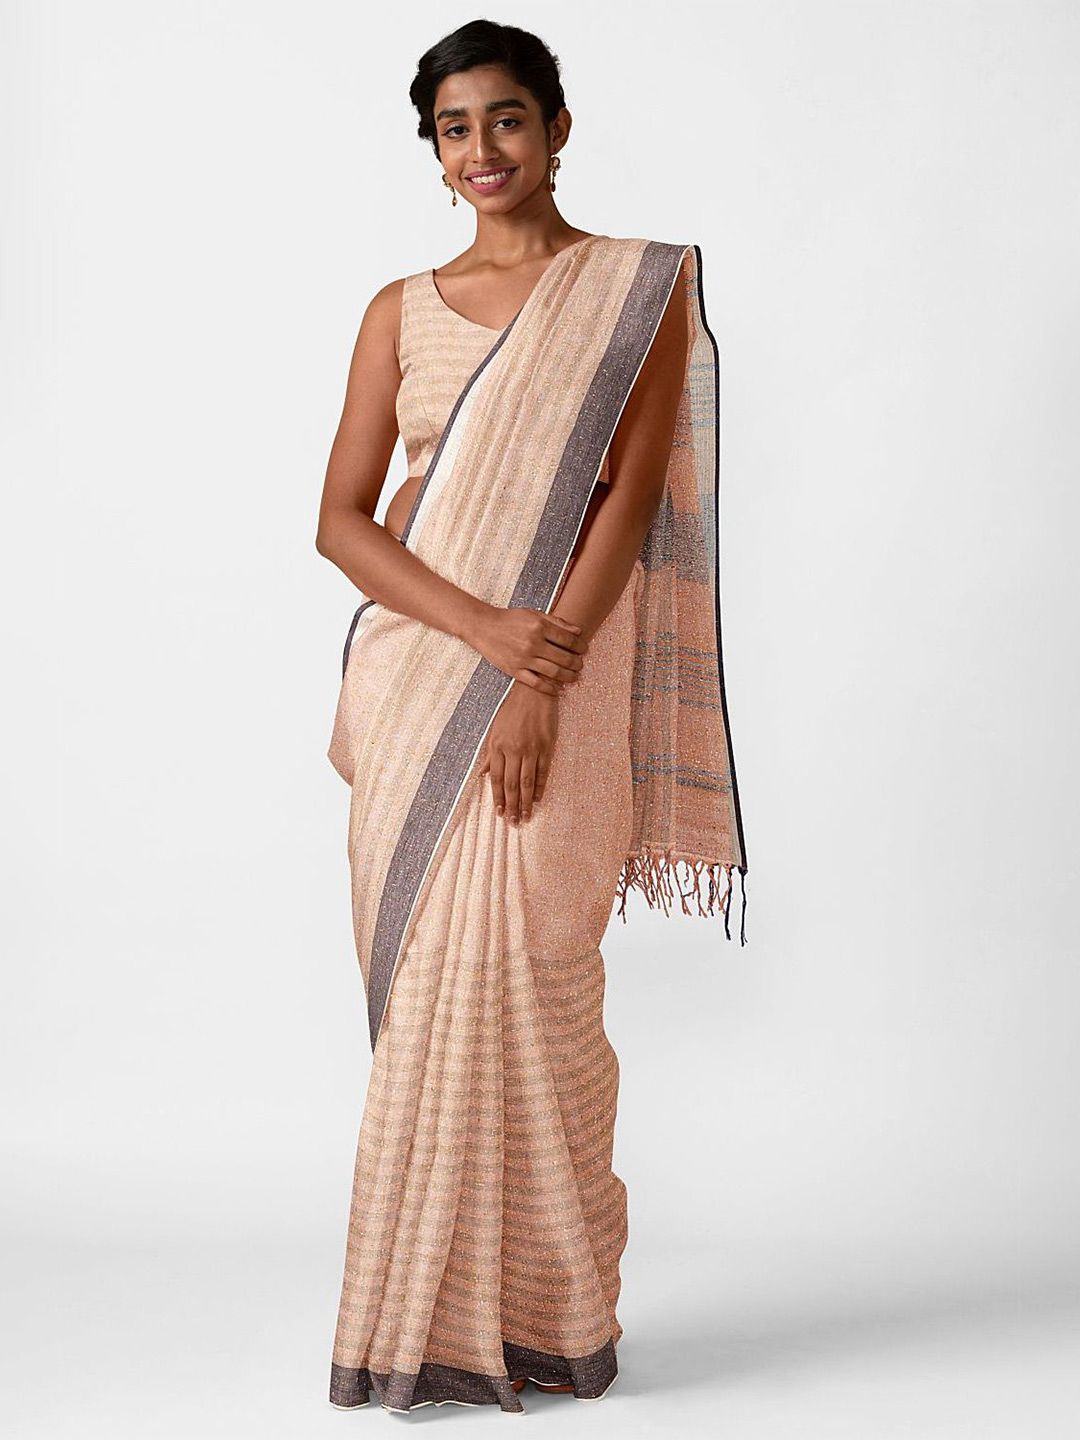 Taneira Beige & Grey Striped Pure Silk Bhagalpuri Saree Price in India